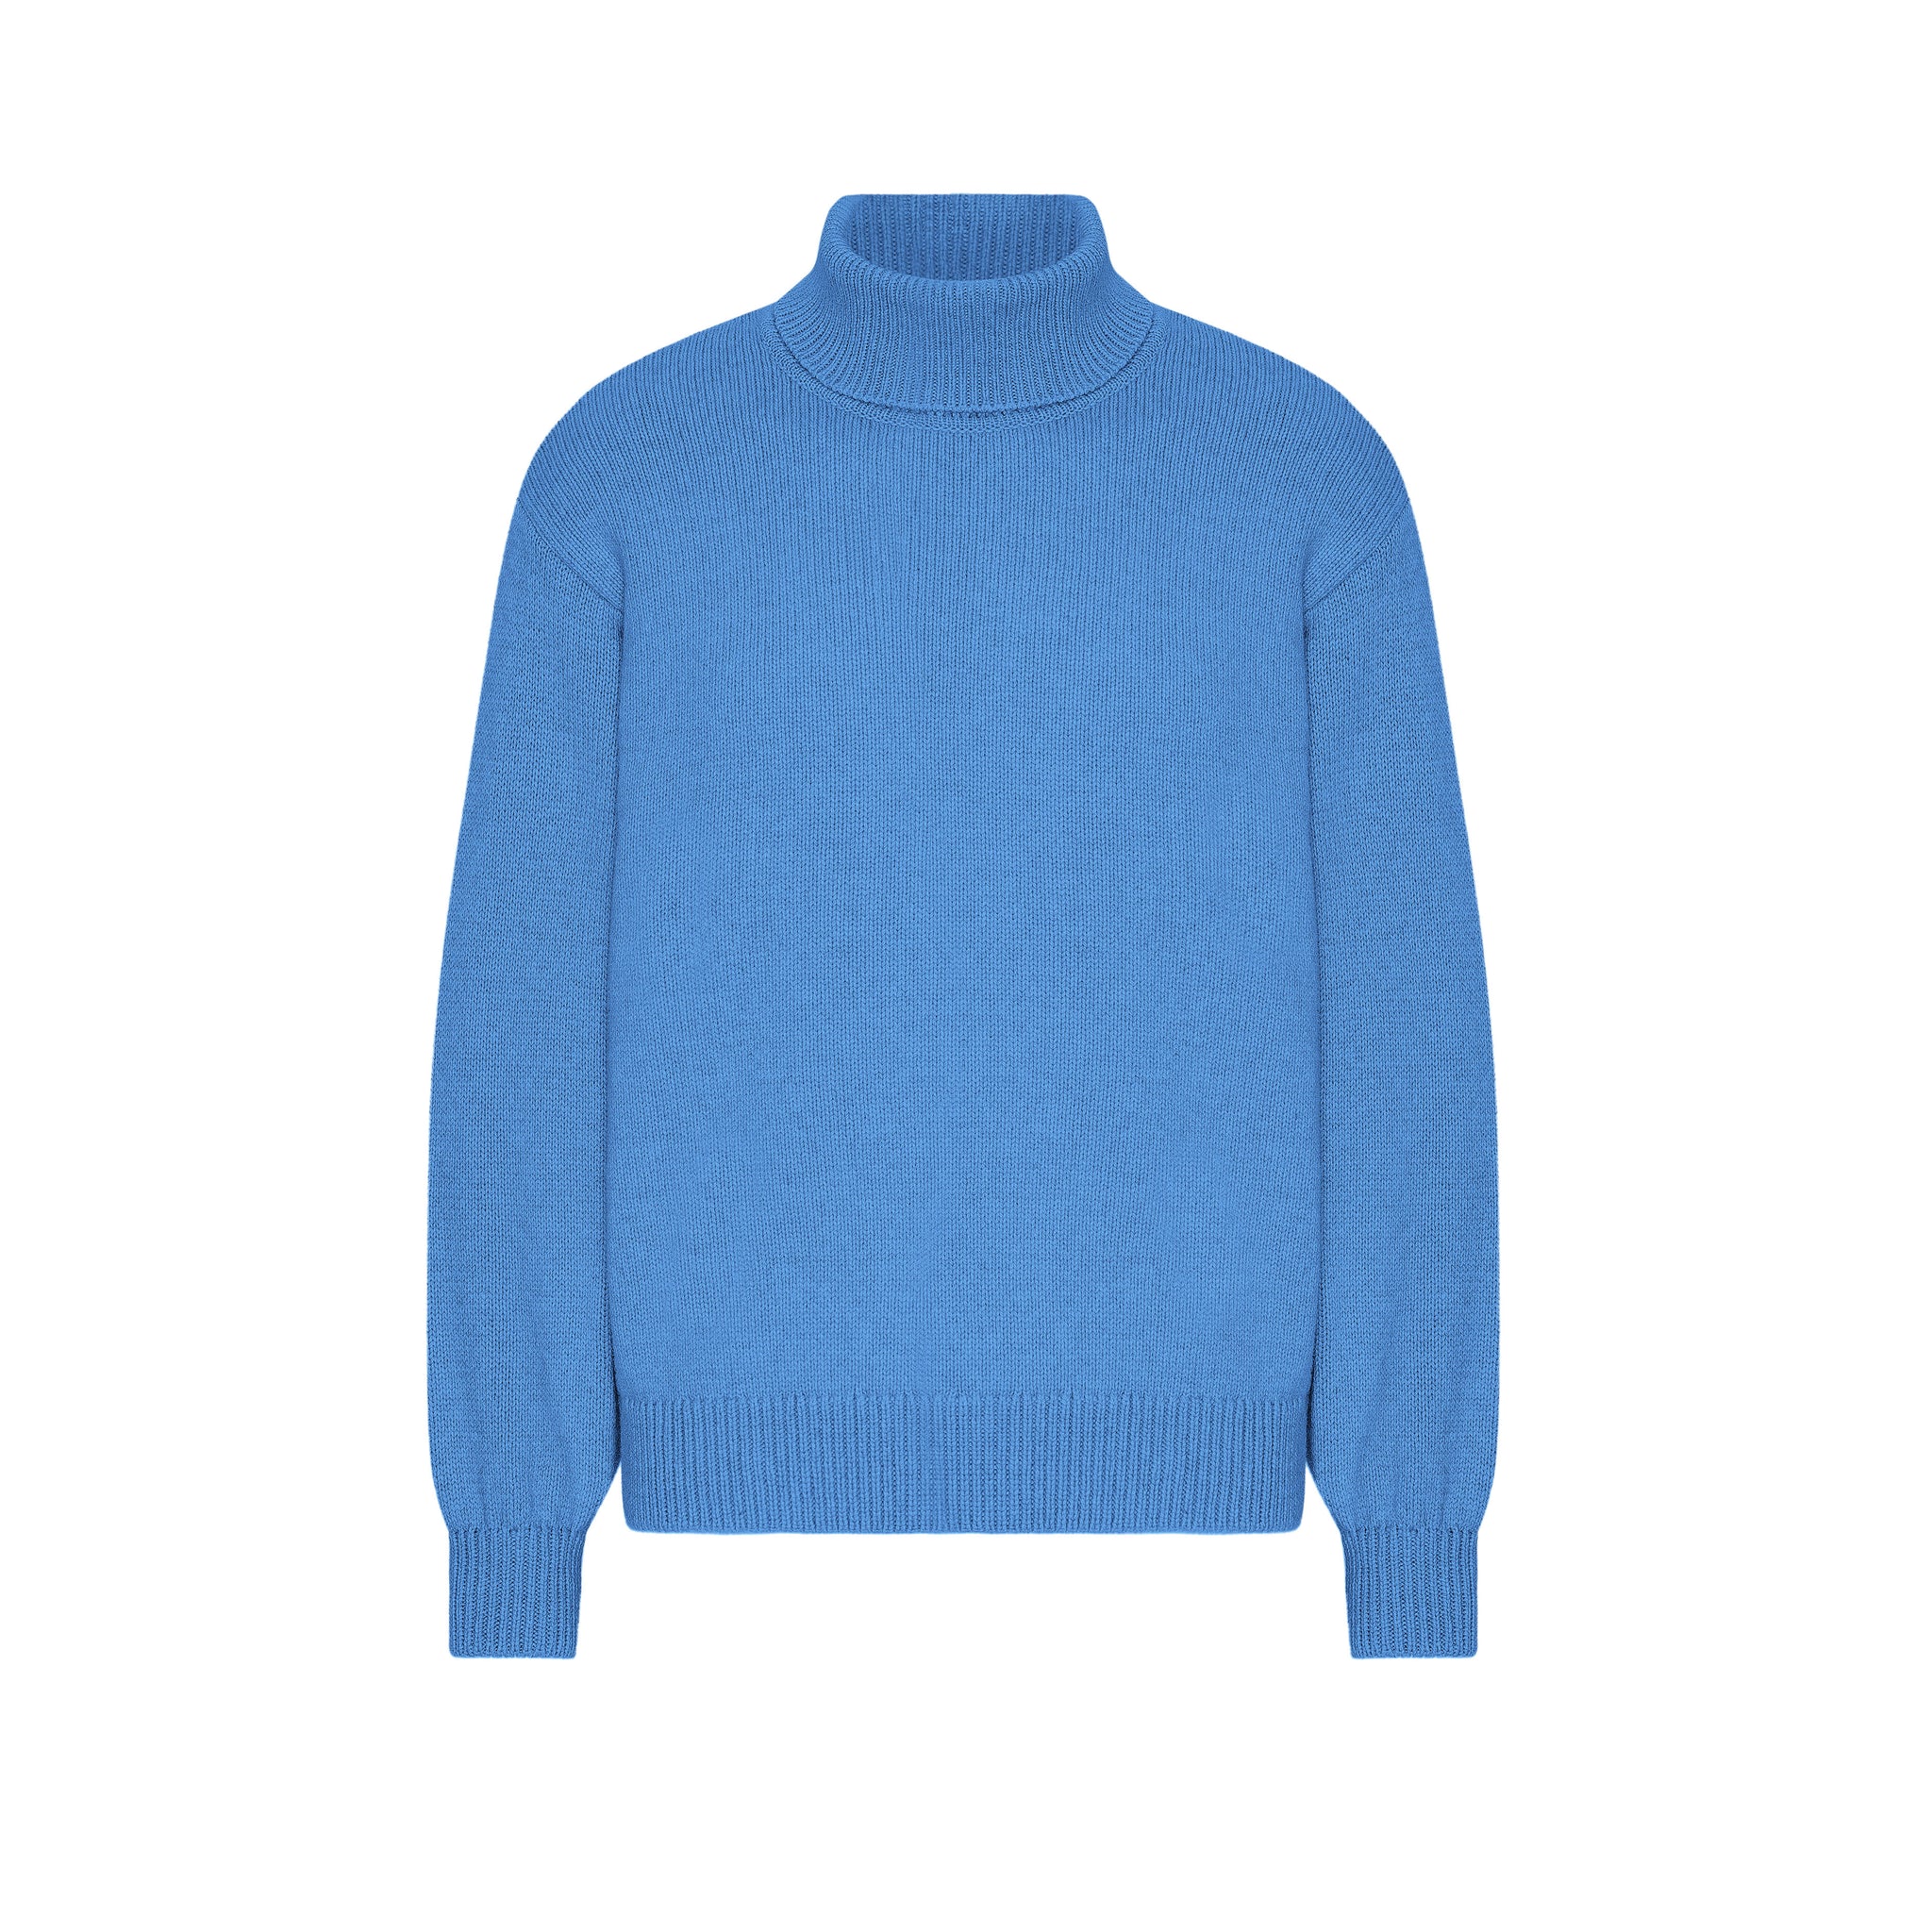 Merino wool turtleneck in pacific blue